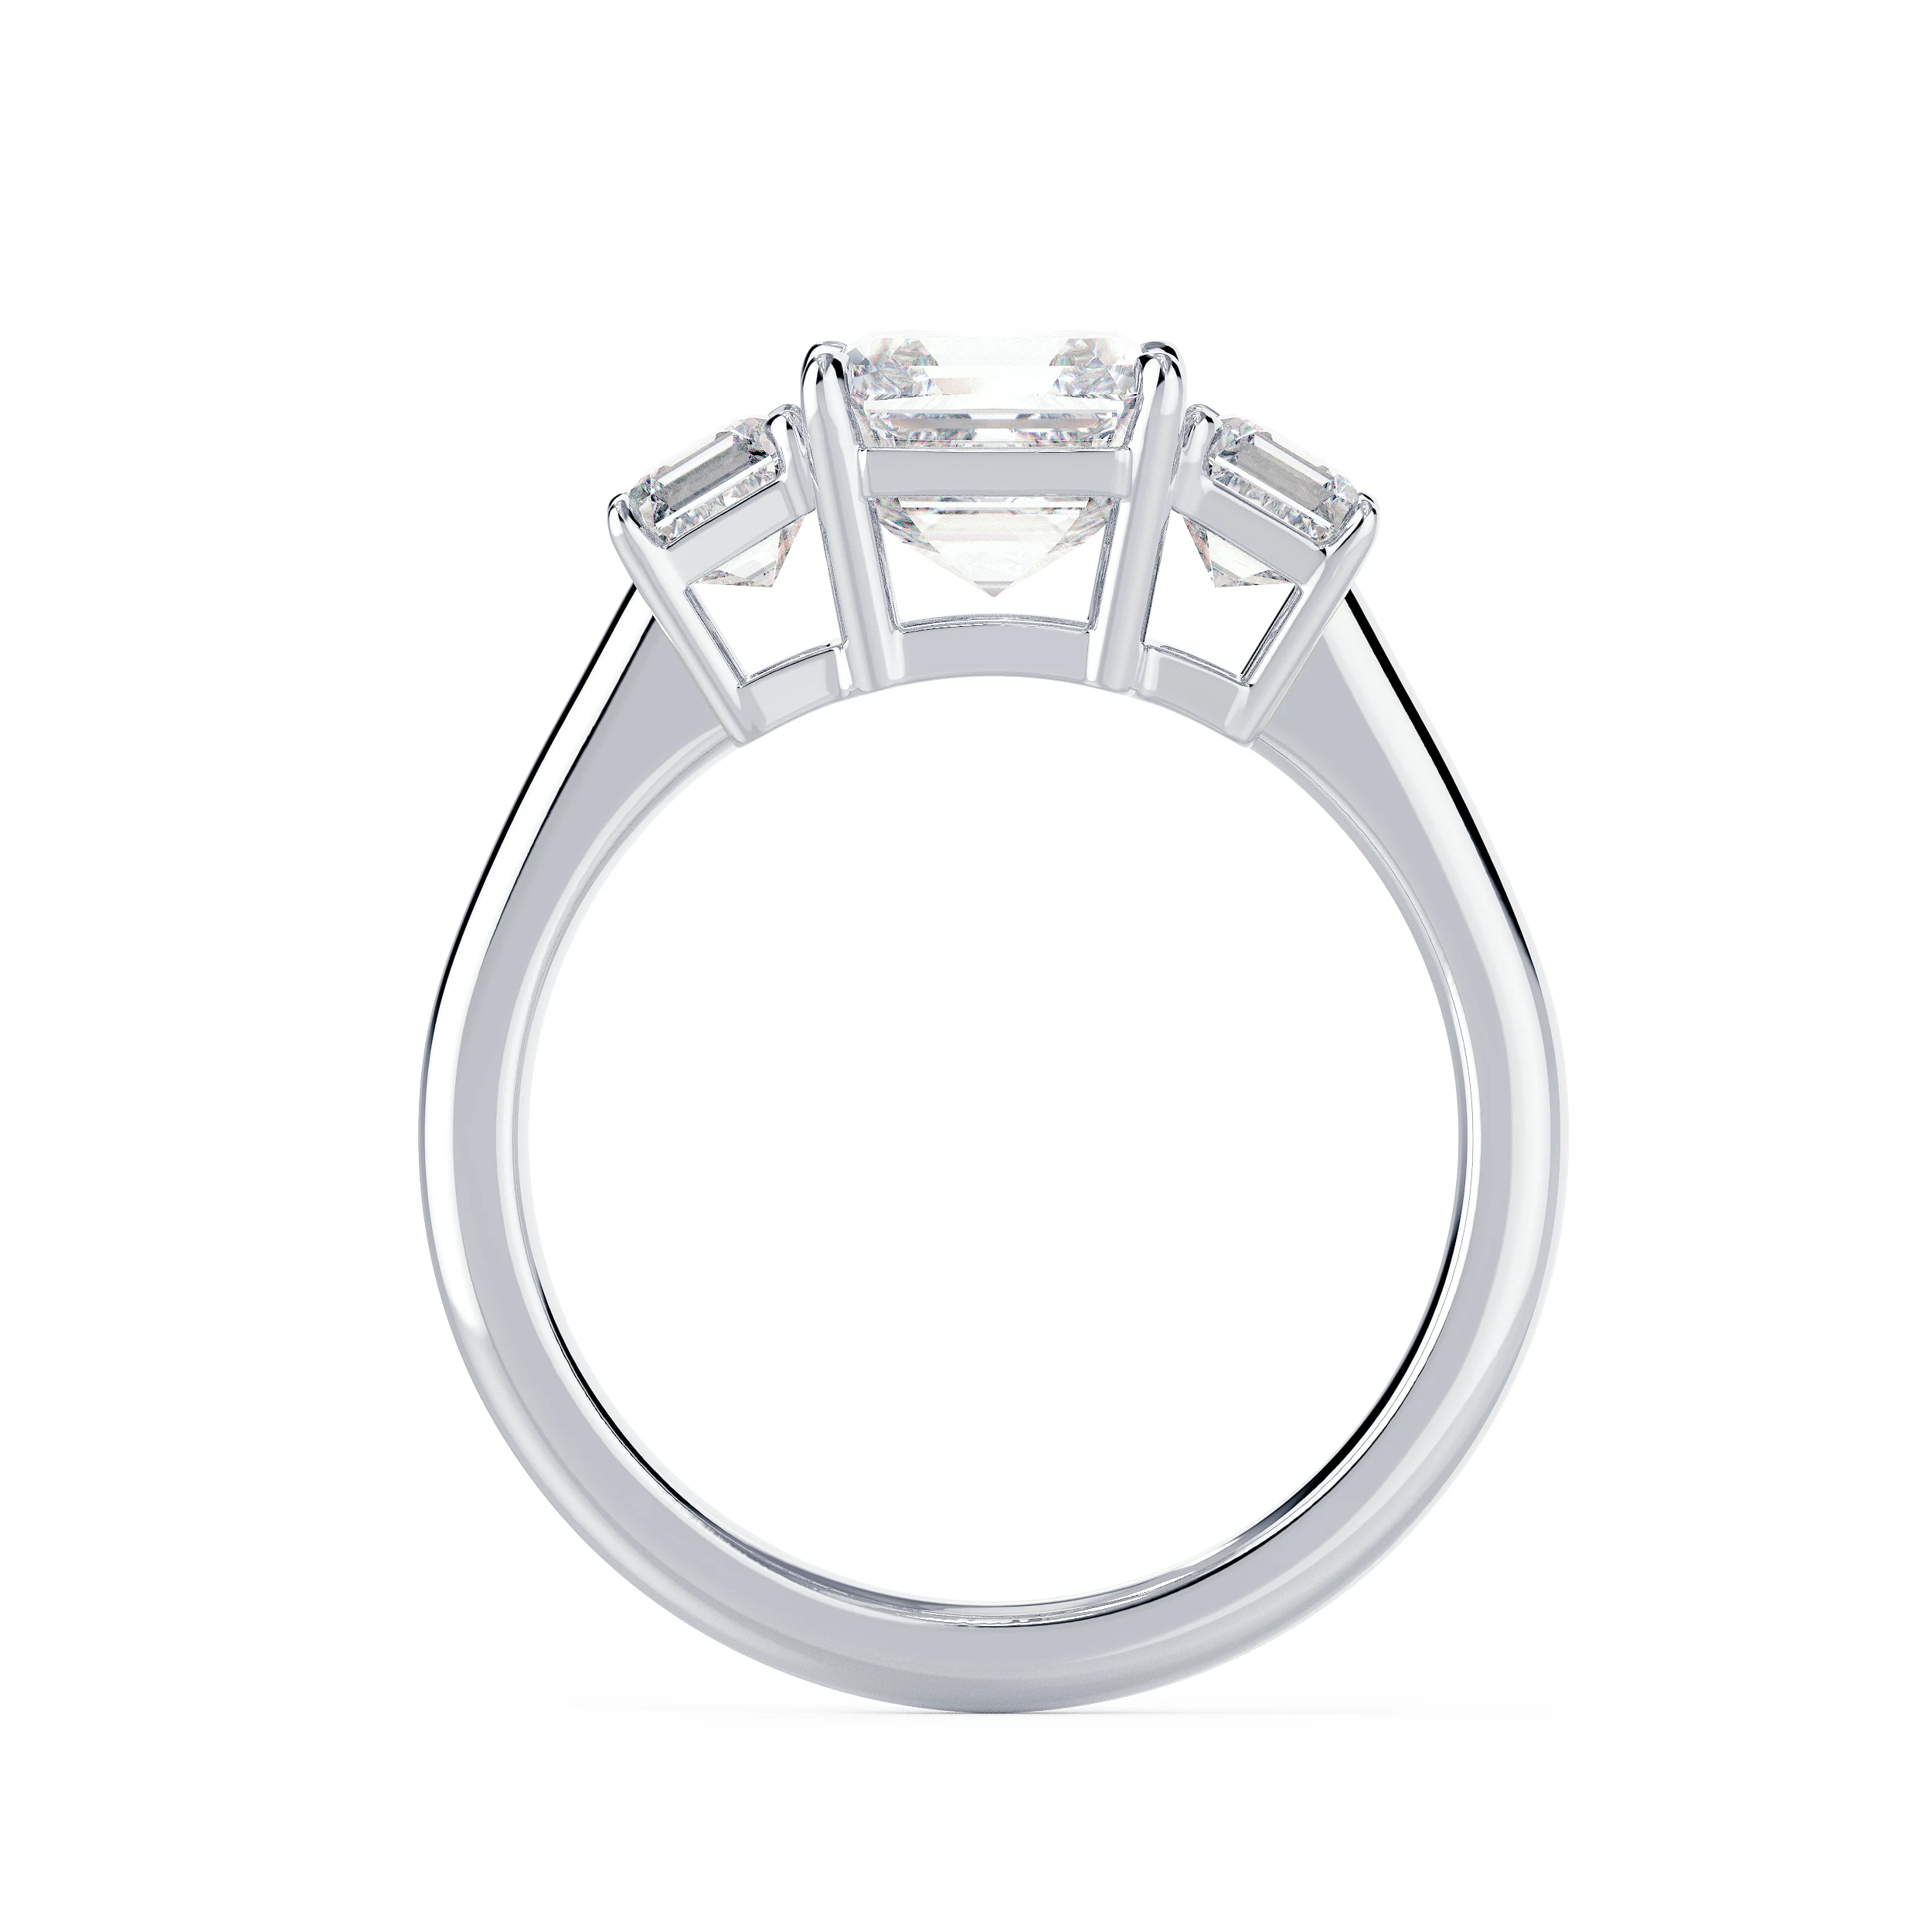 Lab Diamonds Asscher Three Stone Diamond Engagement Ring in White Gold (Profile View)